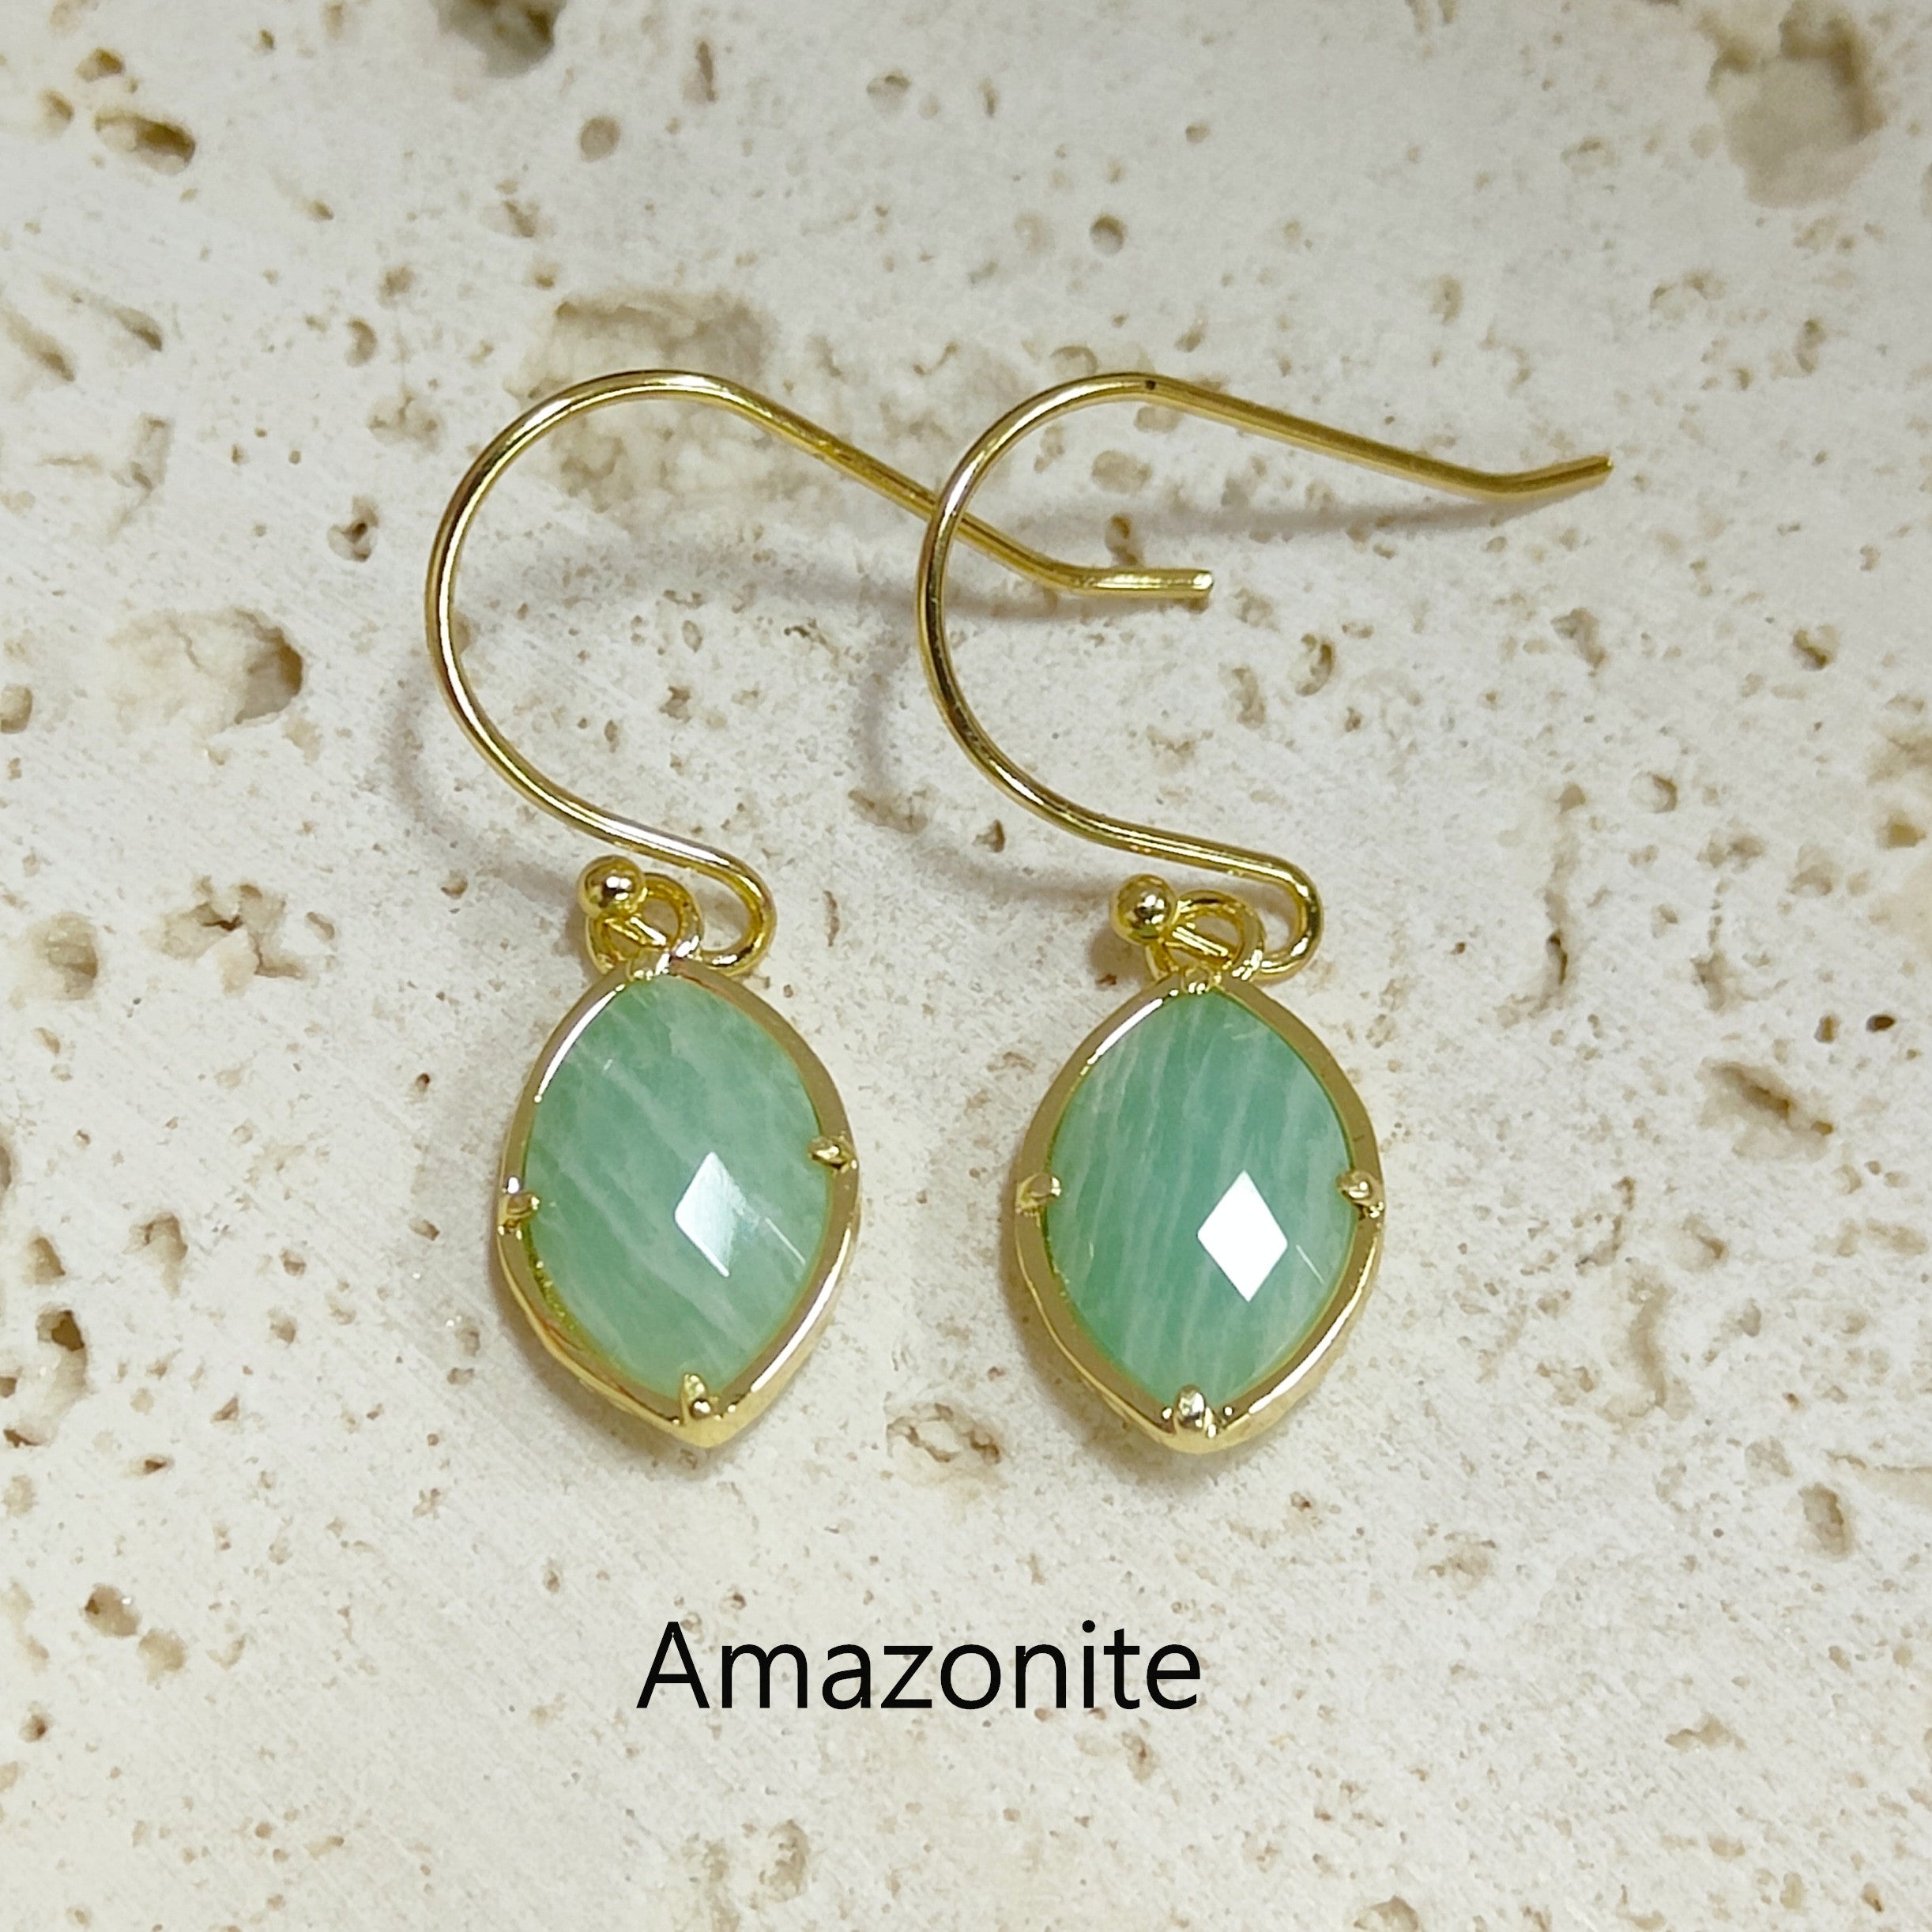 Amazonite earrings Wholesale Gold Plated Marquise Gemstone Earrings, Healing Crystals Stone Earrings Jewelry AL573